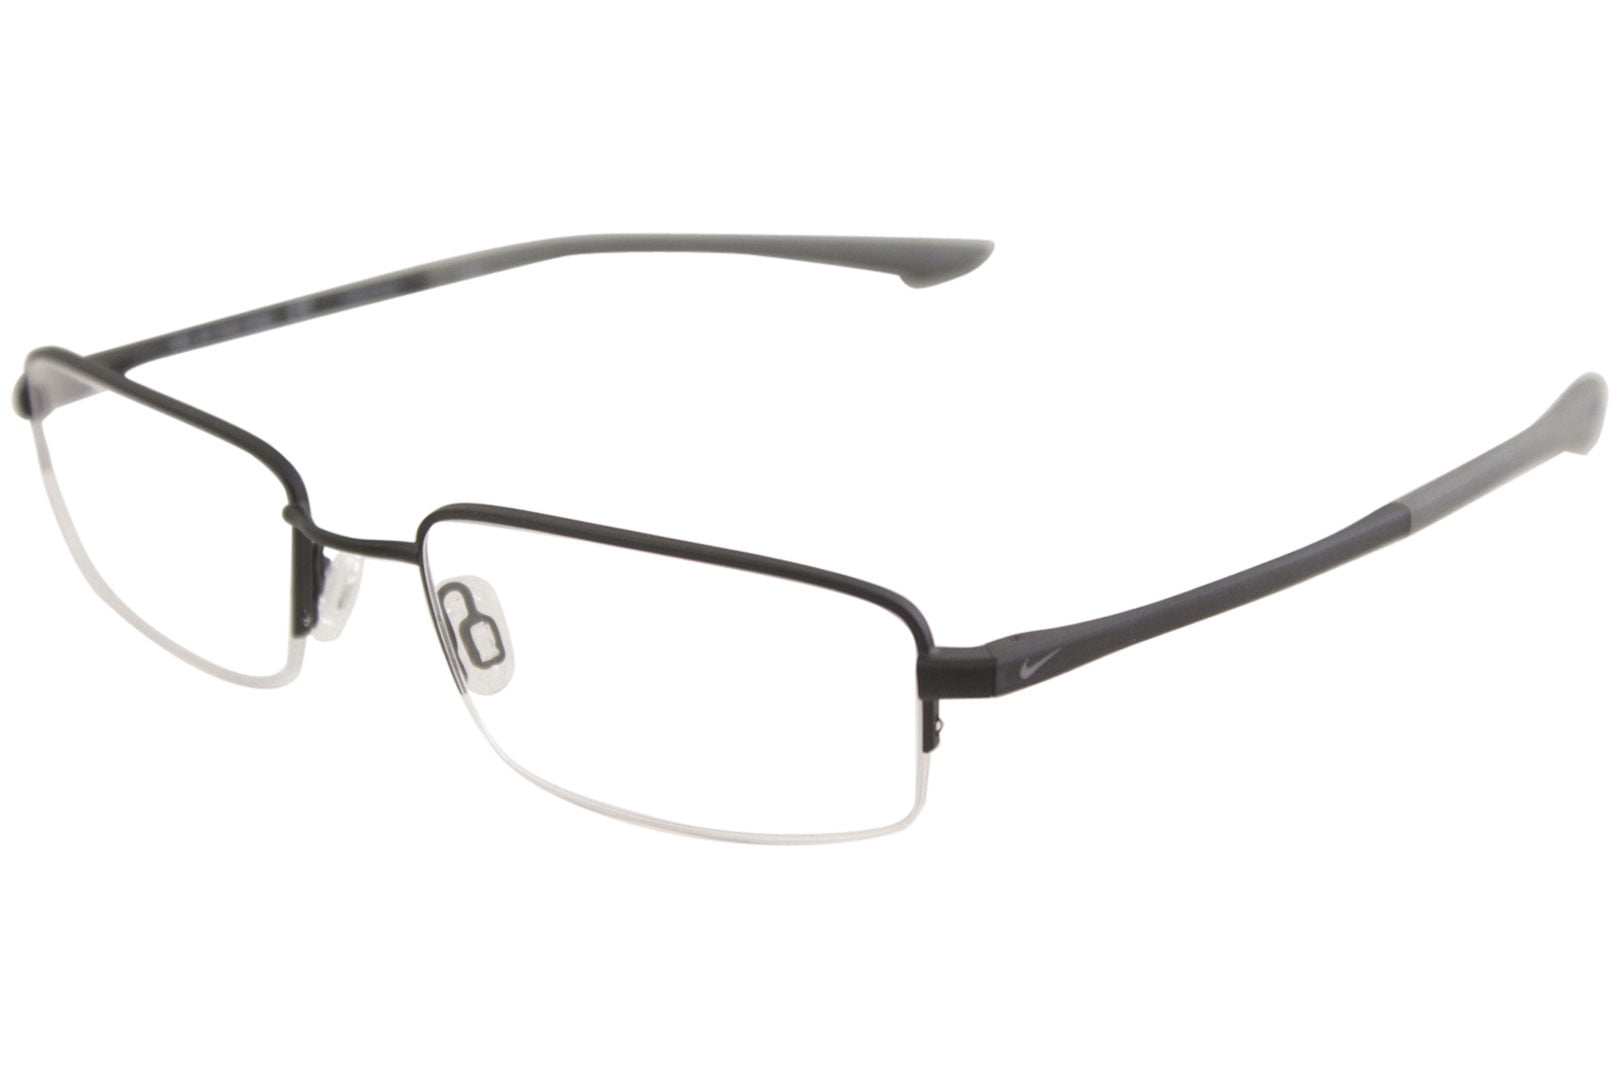 Nike Men's Eyeglasses 001 Satin Black Half Rim Flexon Optical Frame Walmart.com